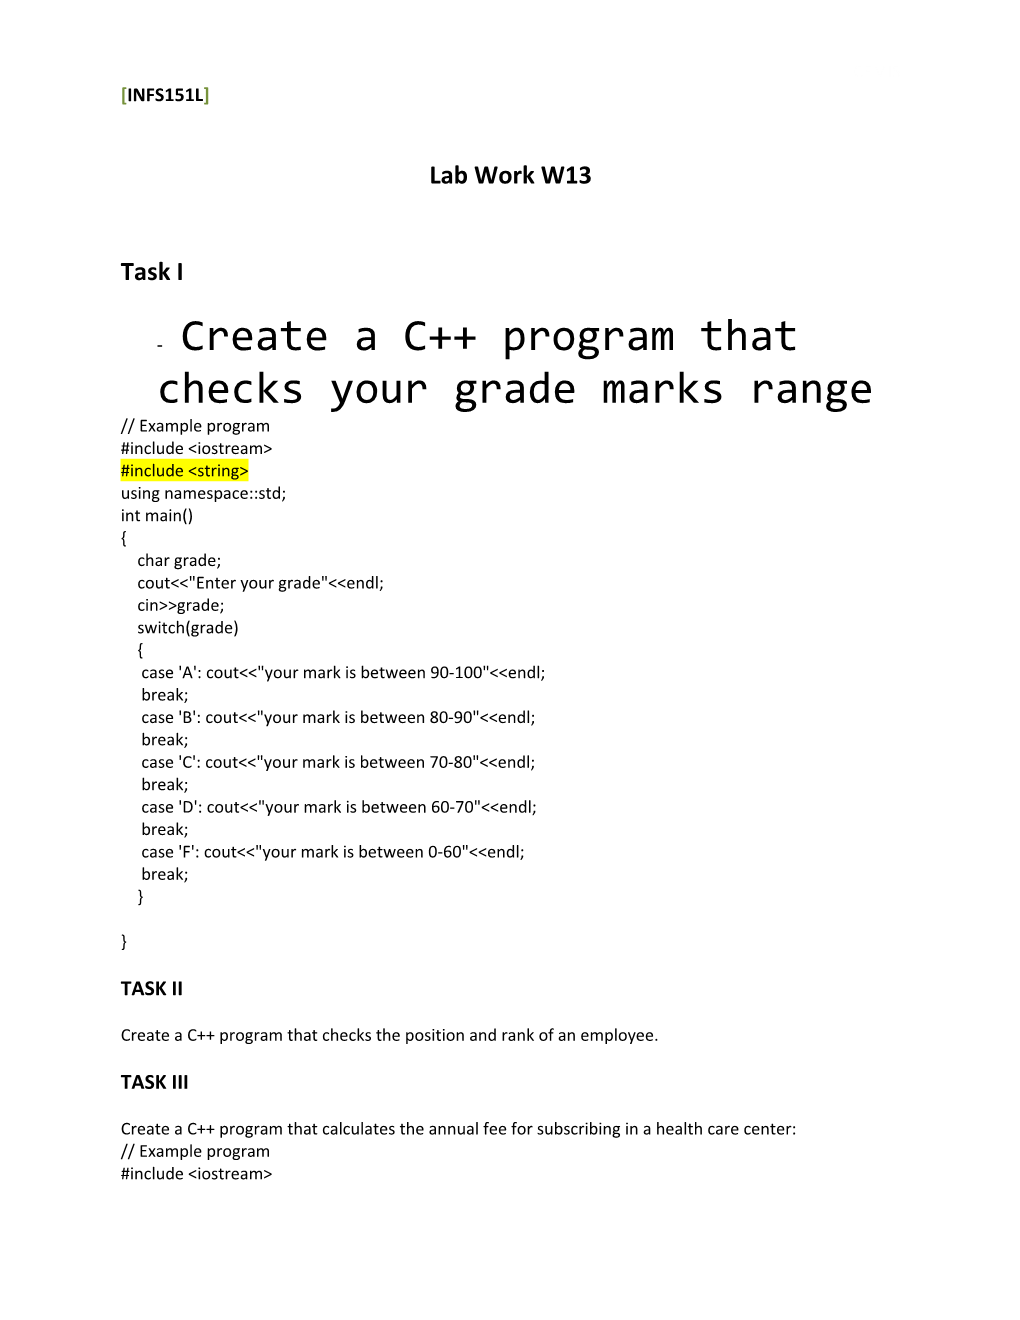 Create a C Program That Checks Your Grade Marks Range